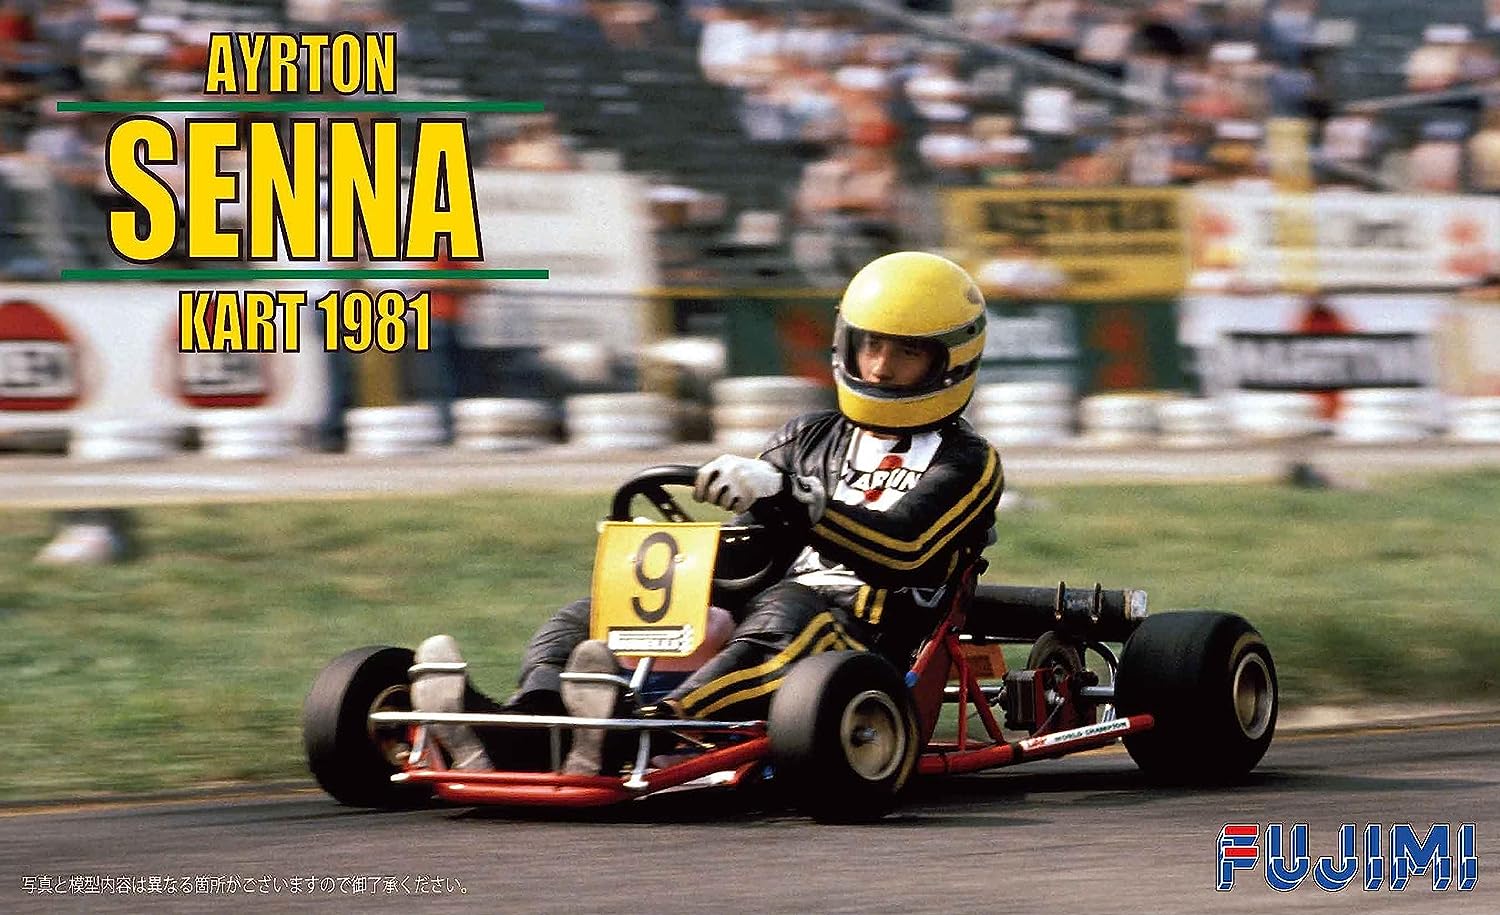 KART Series No.1 Ayrton Senna Kurt 1981 (1/20 scale)